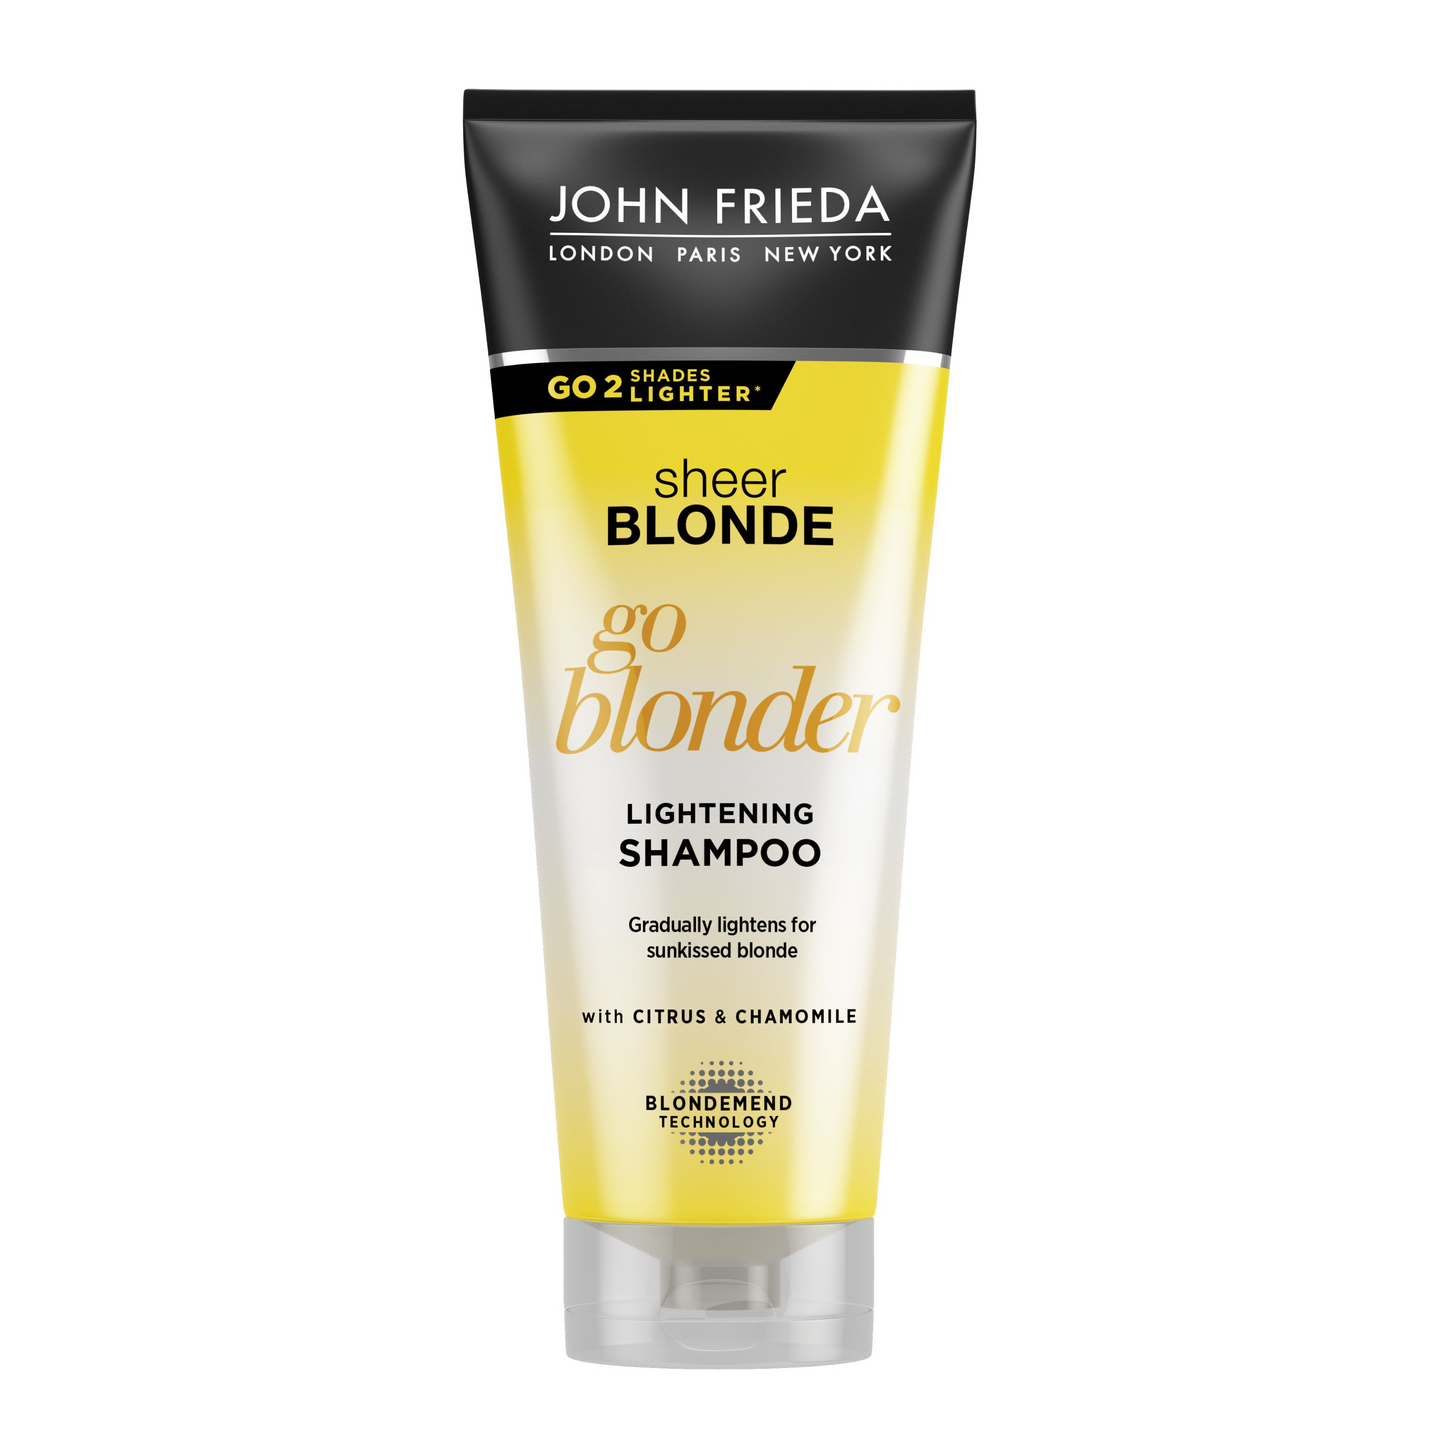 John Frieda Sheer Blonde shampoo 250ml Go Blonder